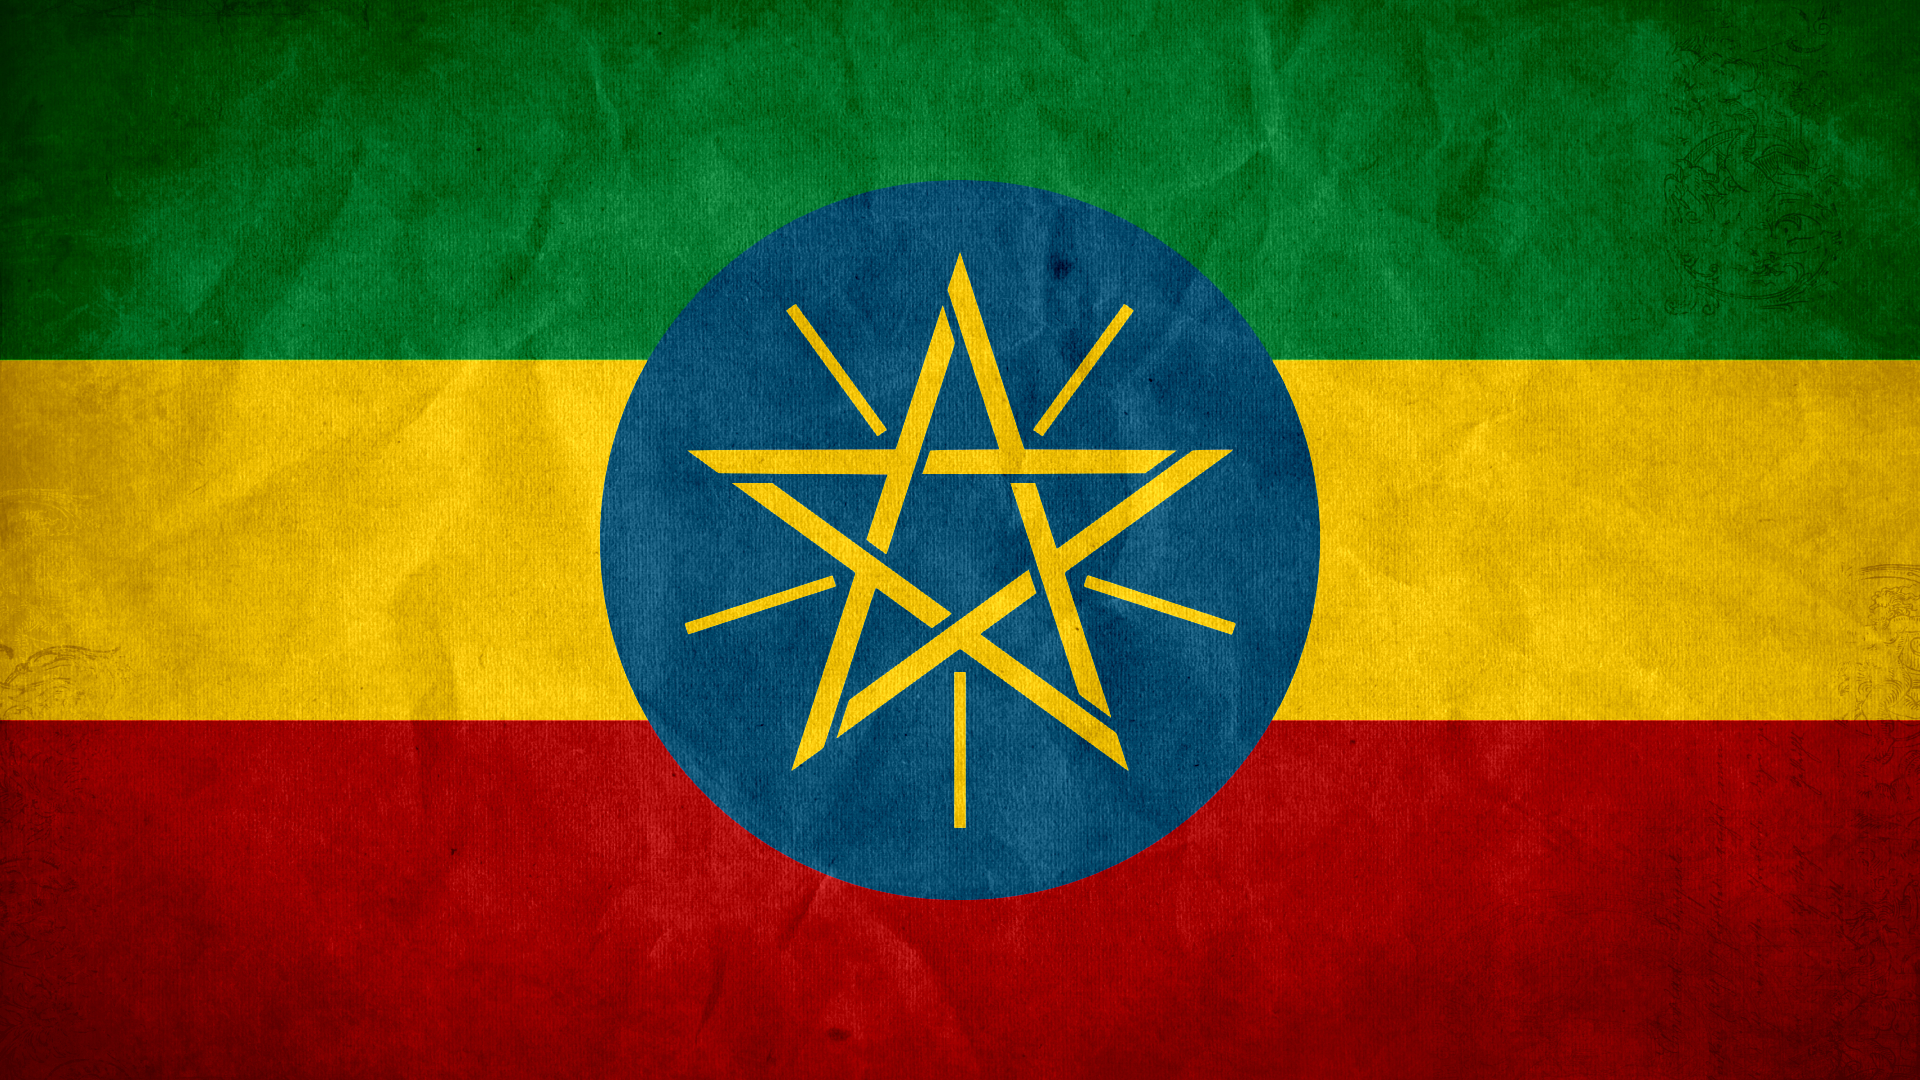 Ethiopia Flag Day hd wallpapers desktop windows 81 Picturenixcom